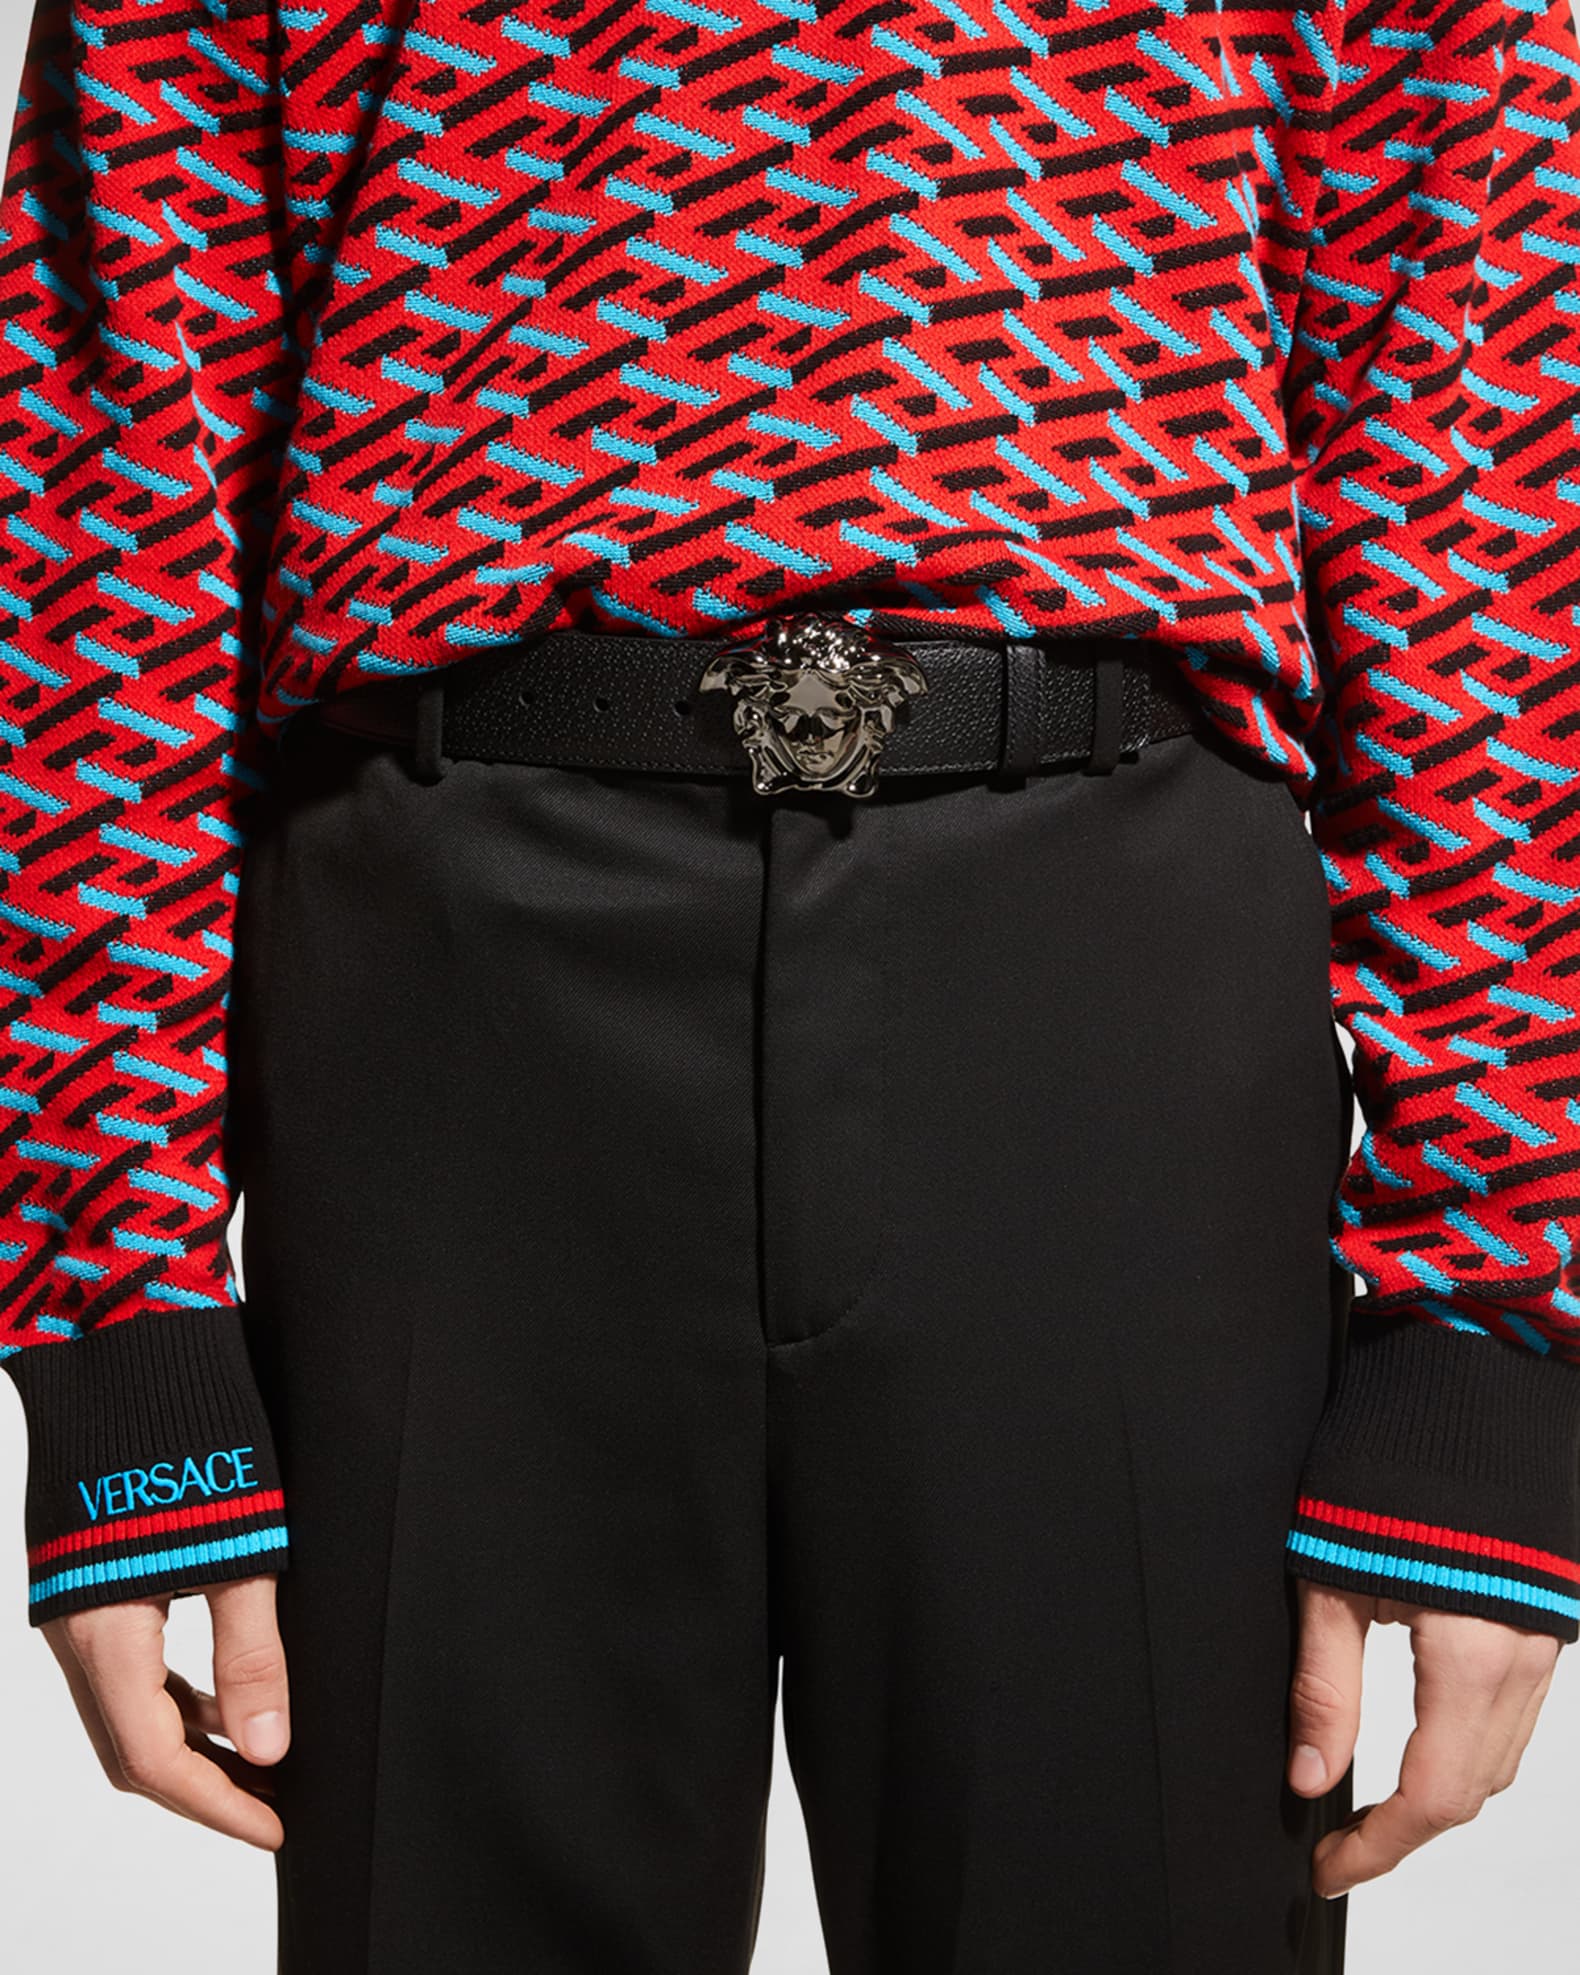 Versace Red Belts for Men